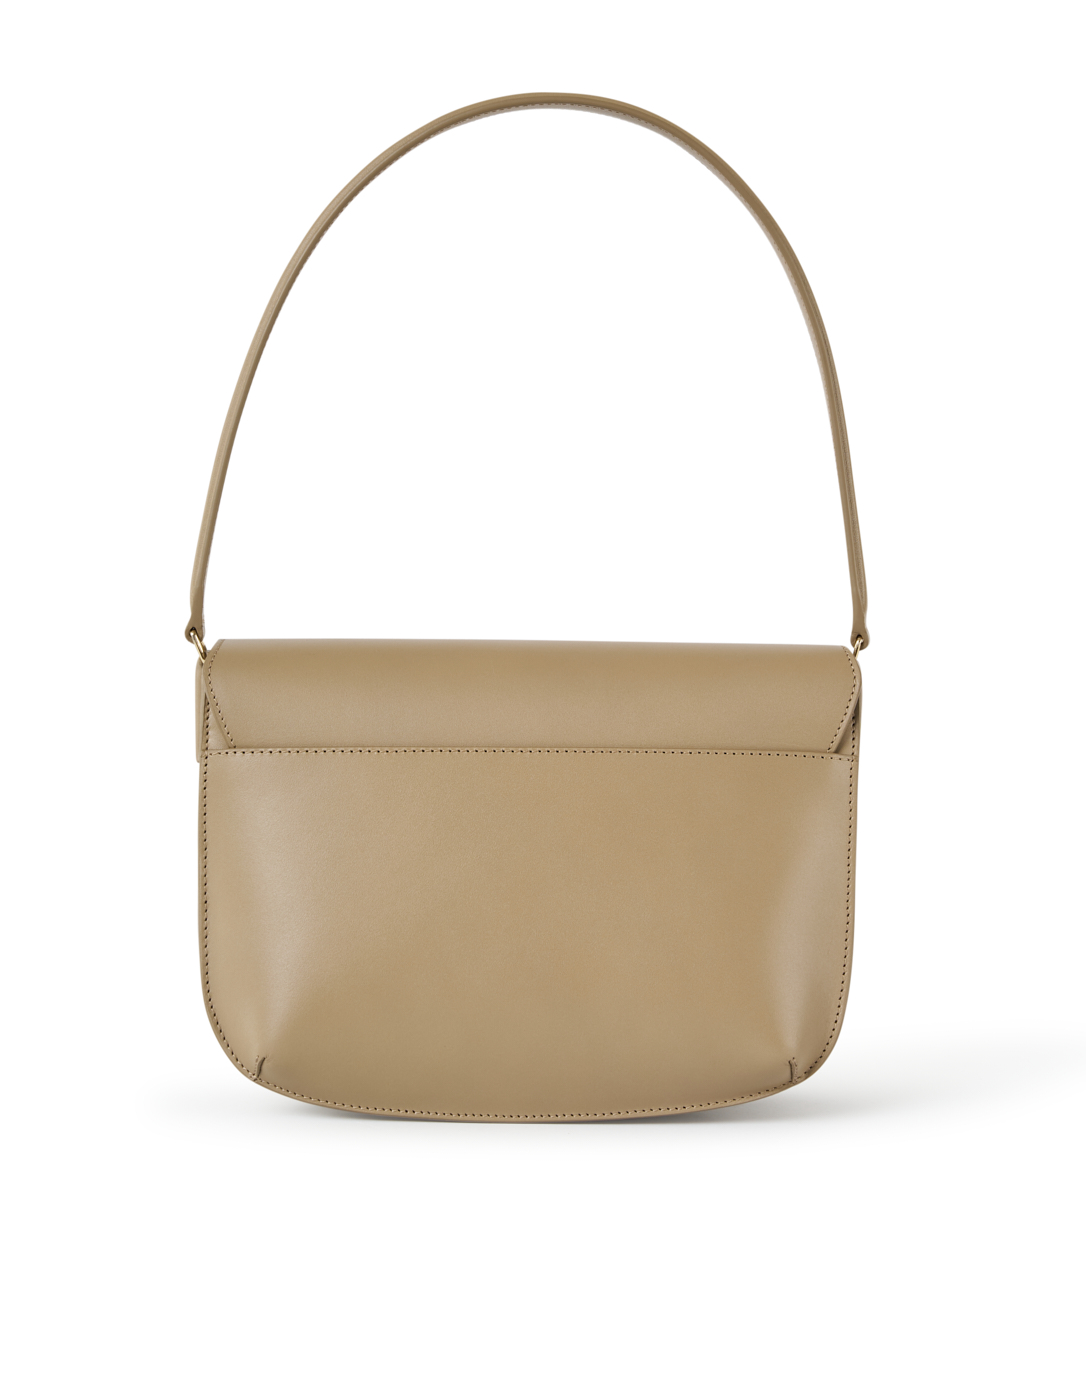 A.P.C. Sara Taupe Leather Shoulder Bag